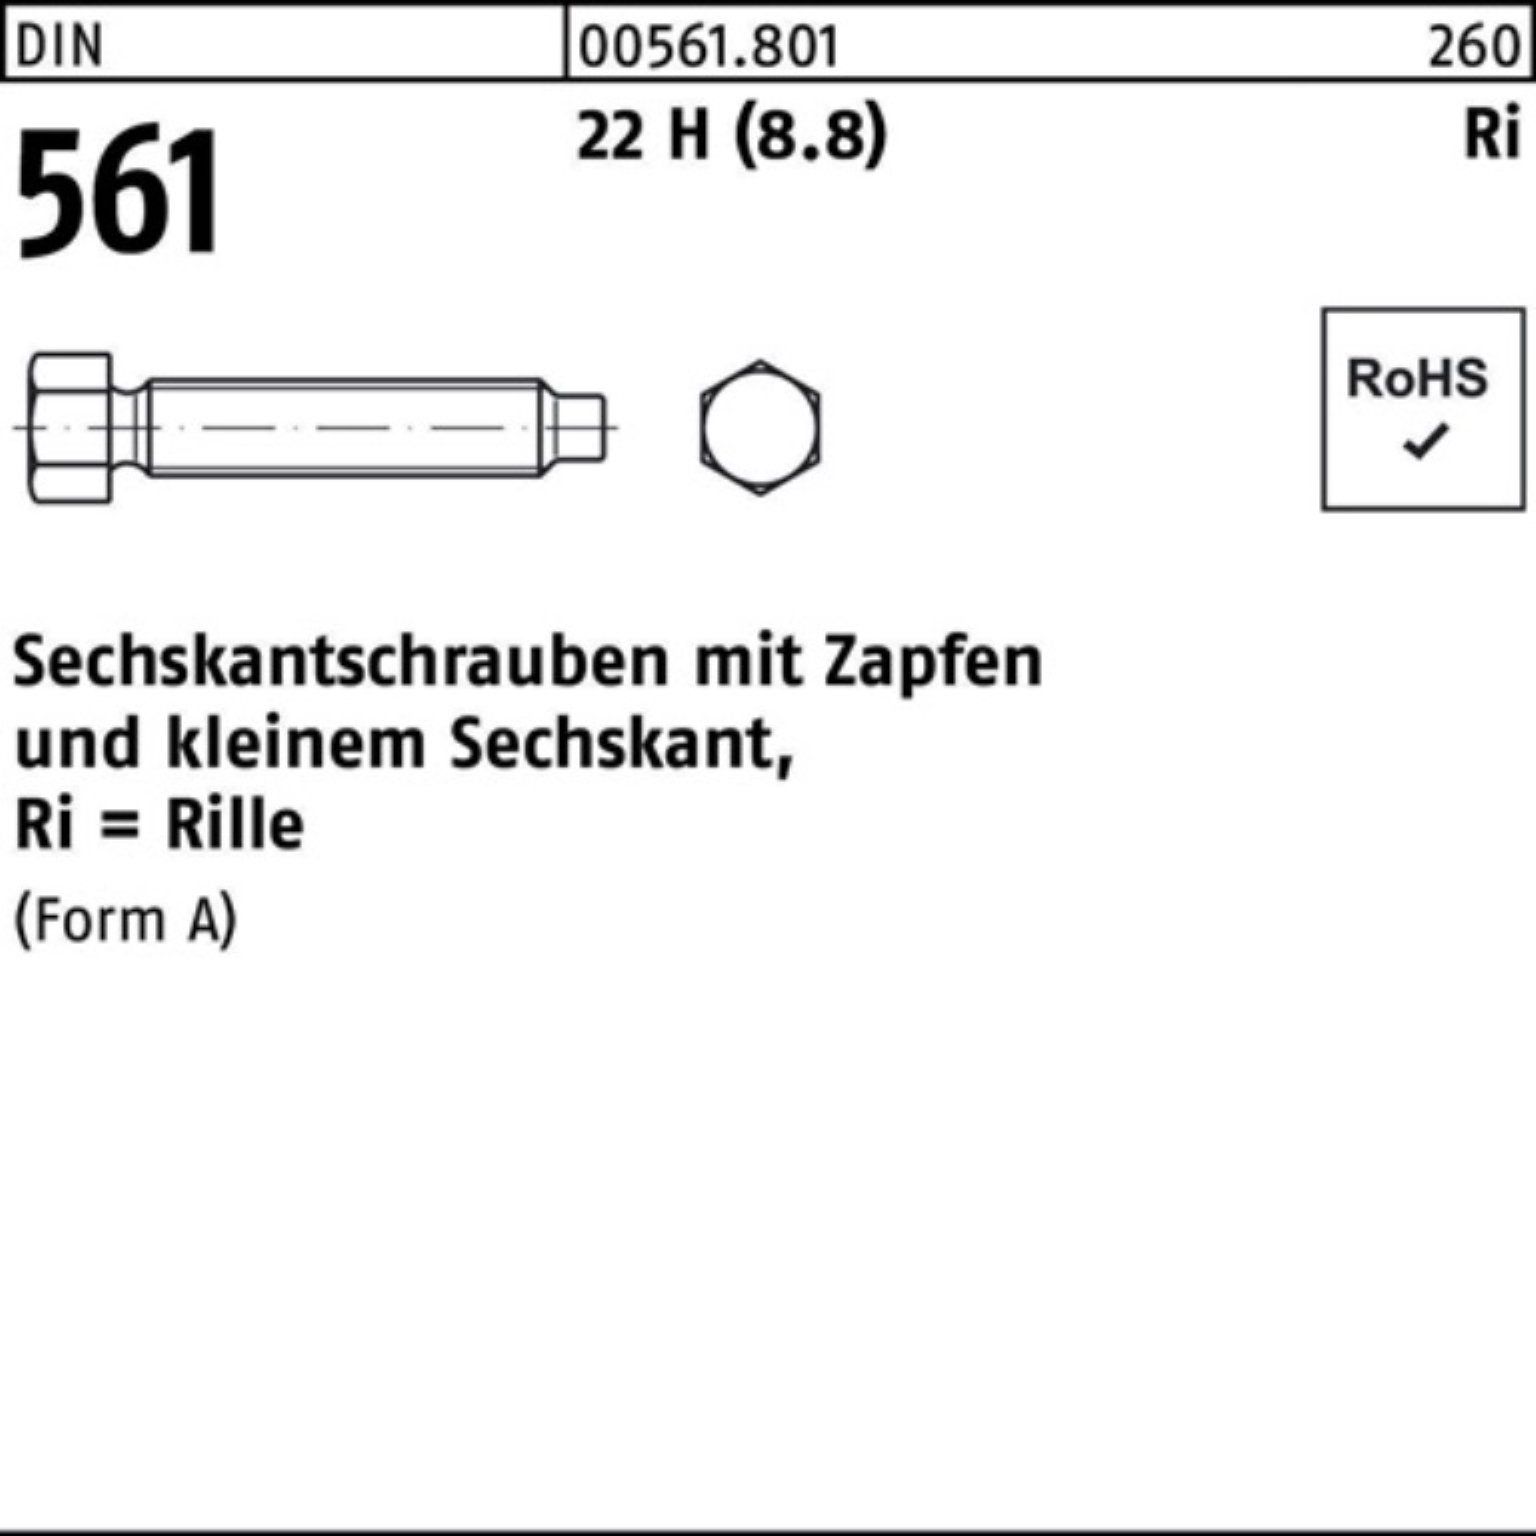 Reyher Sechskantschraube 100er Pack Sechskantschraube DIN 60 AM St 561 22 30x H (8.8) Zapfen 1